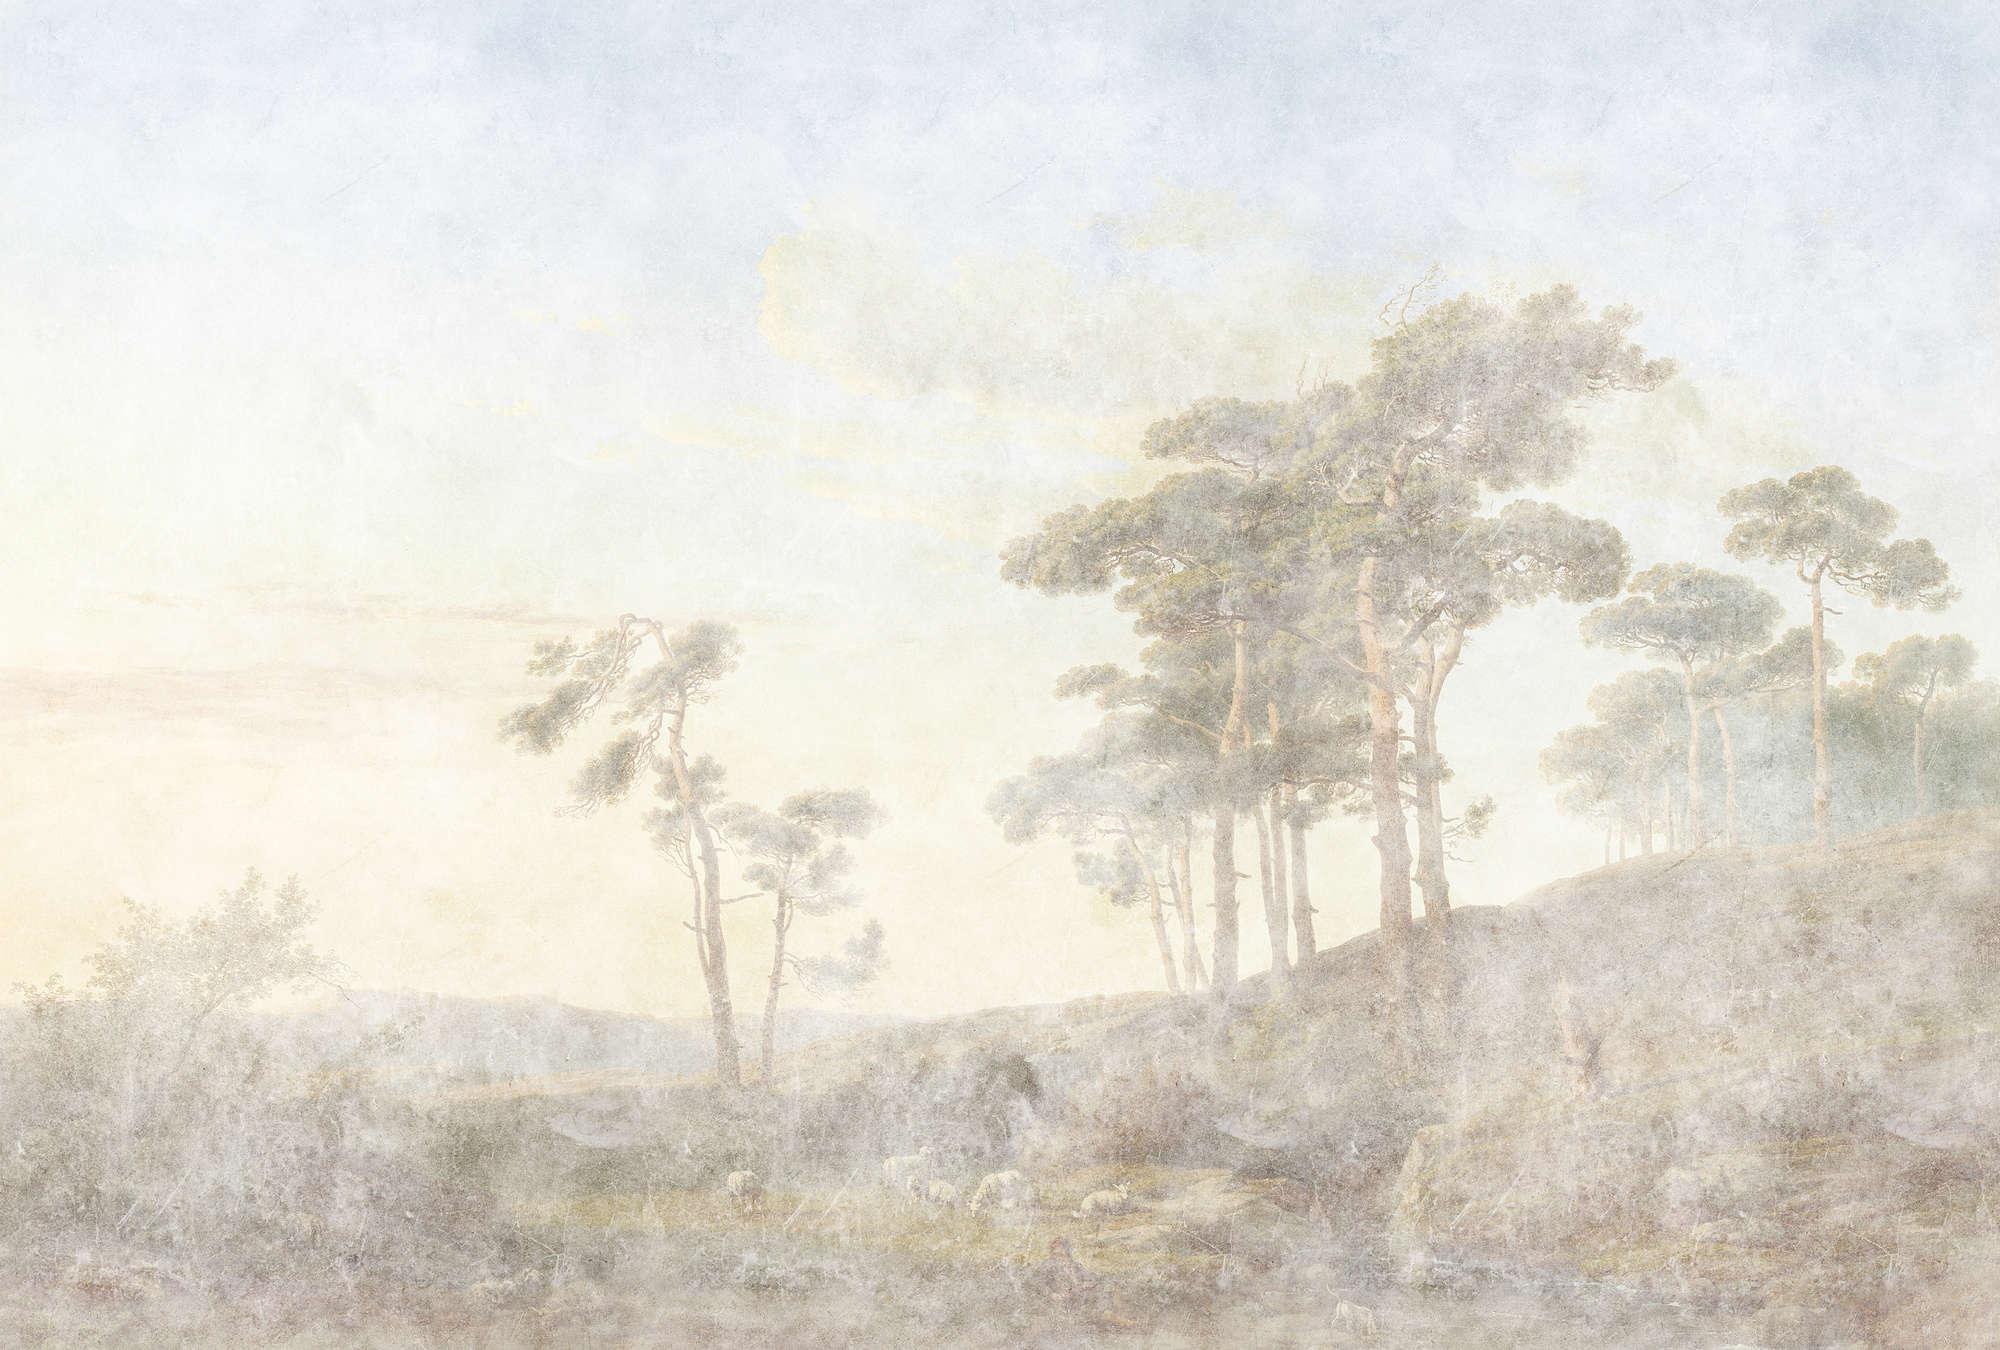             Romantic Grove 1 – Gemälde Fototapete verblasster Used Look
        